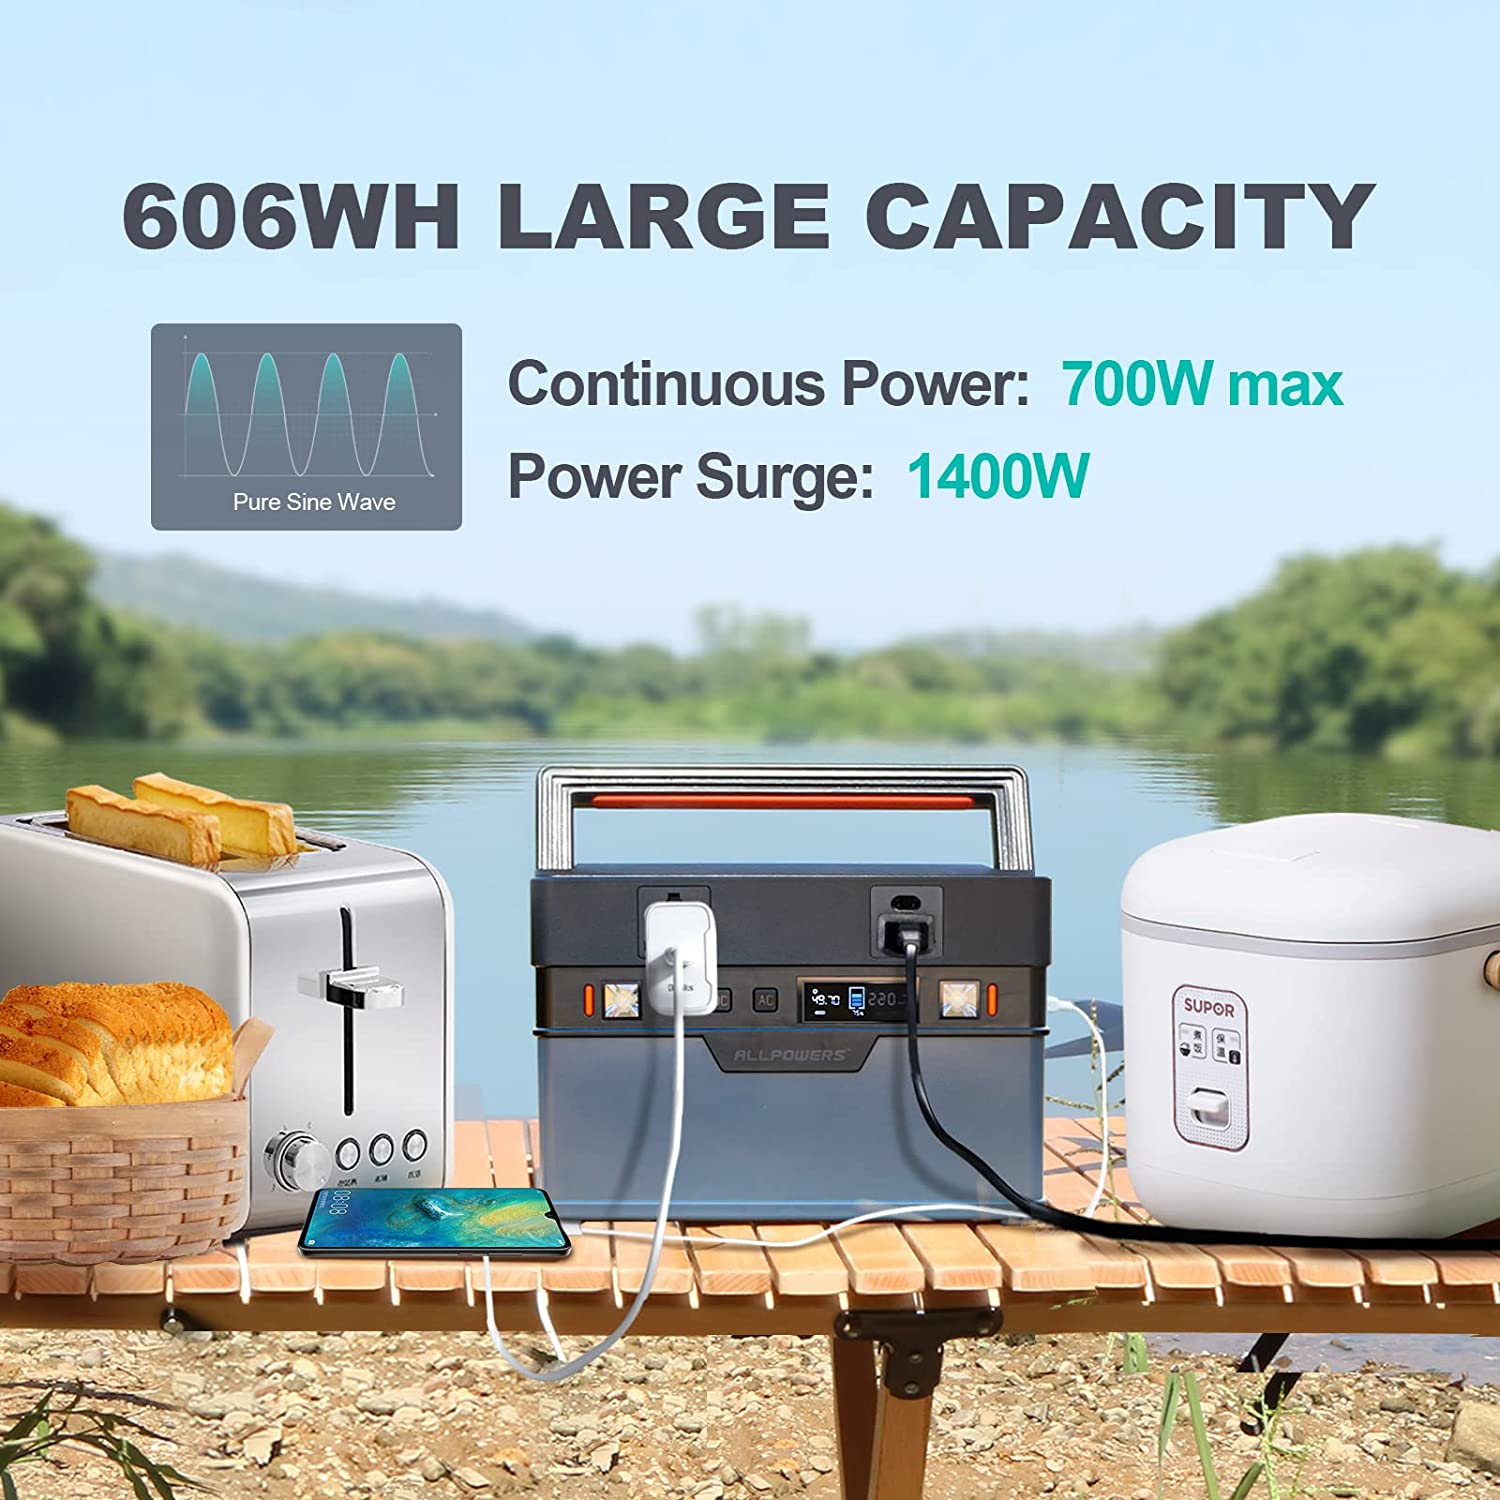 Allpower 700W Portable Power Station 606Wh / 164000Mah Solar